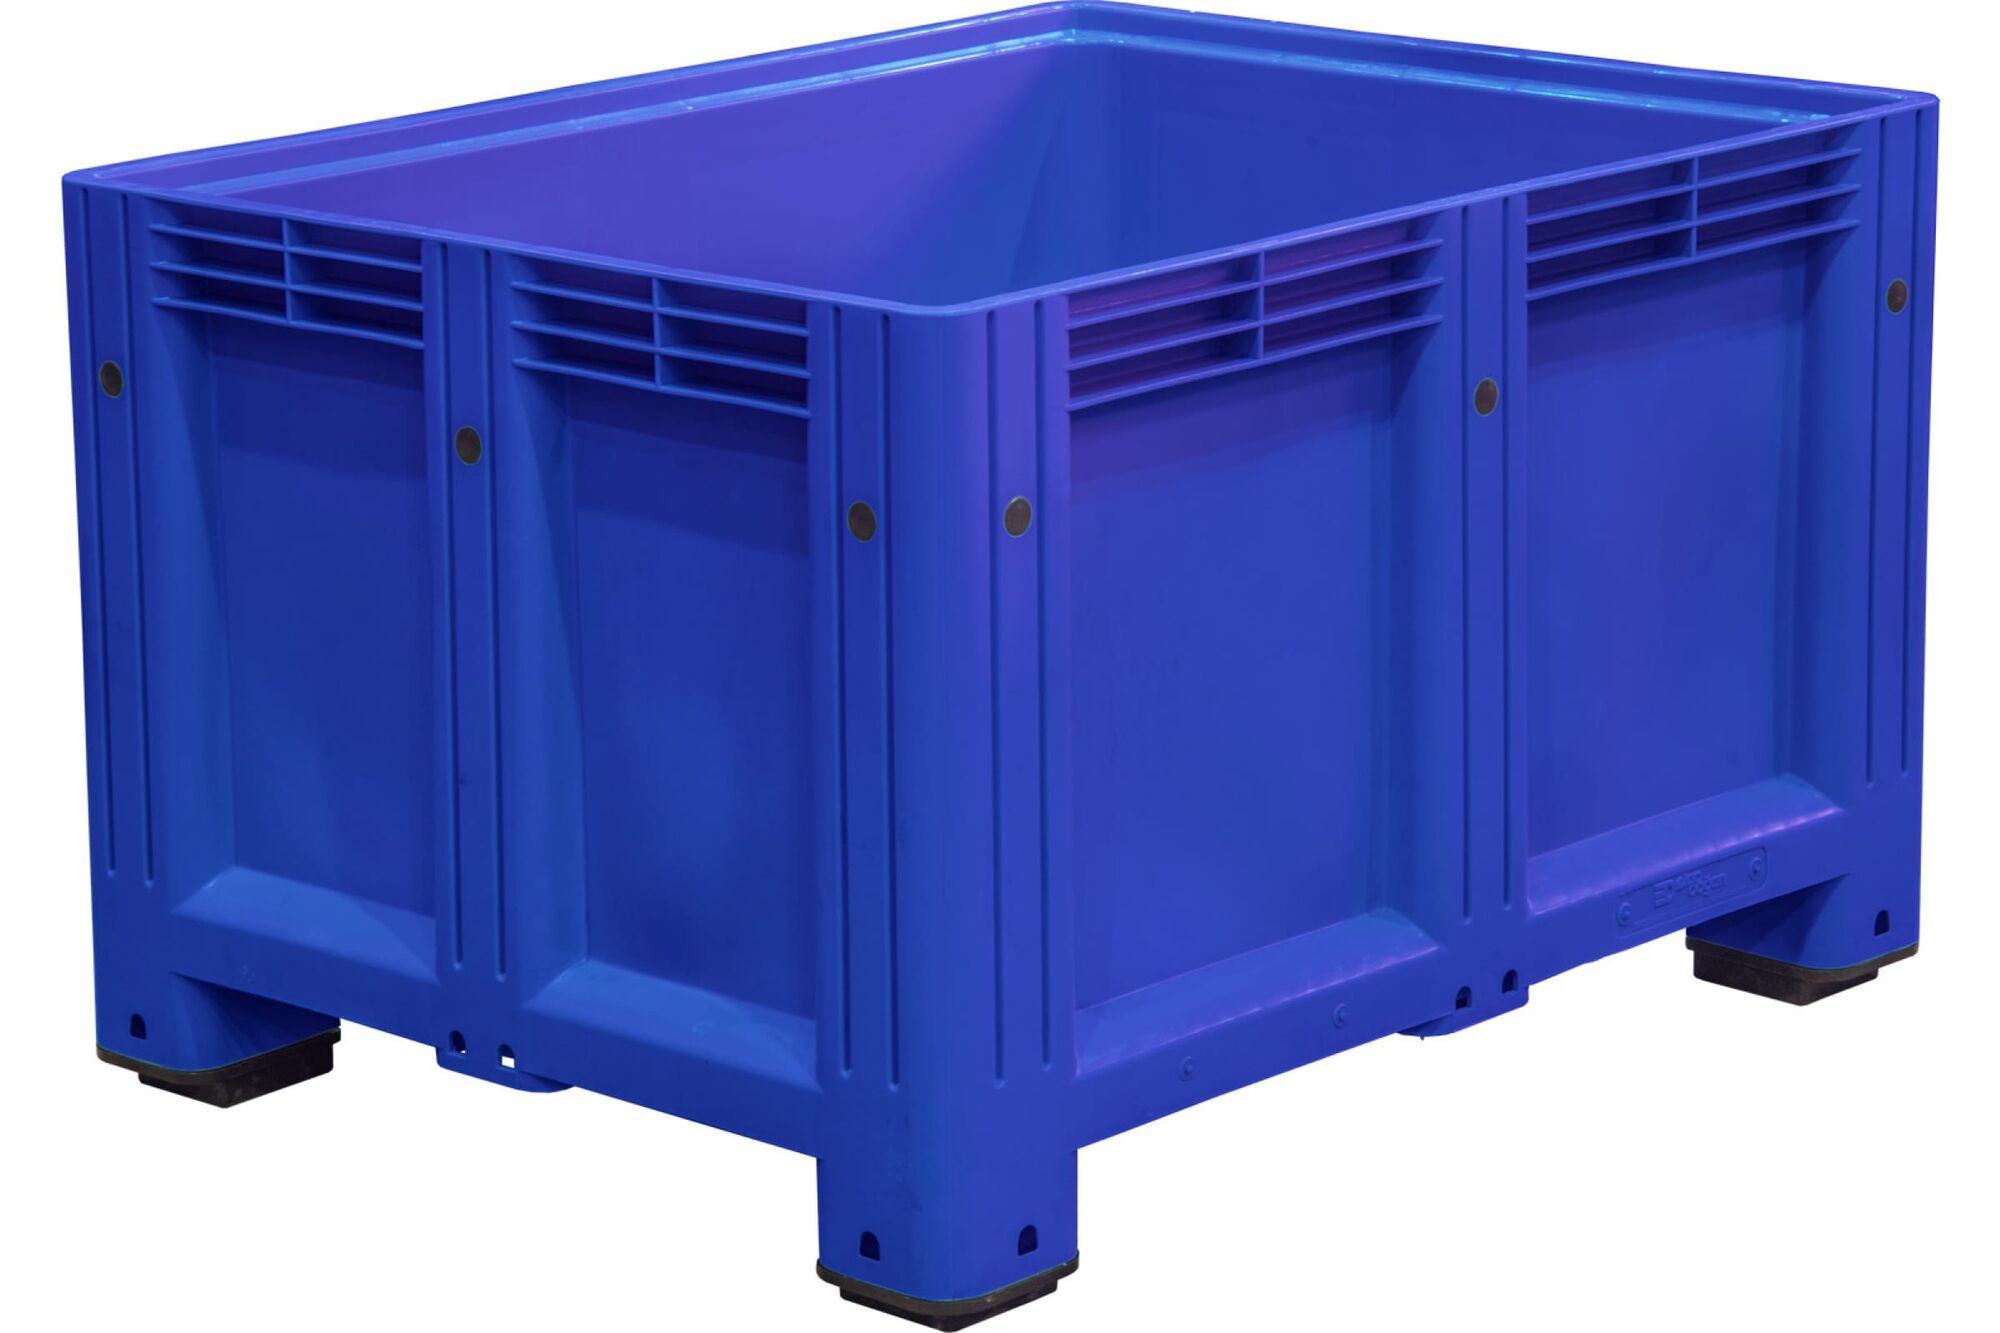 Ящик Big Box Dogan-Etap п/э 1200x1000x760 сплошной, на ножках, синий